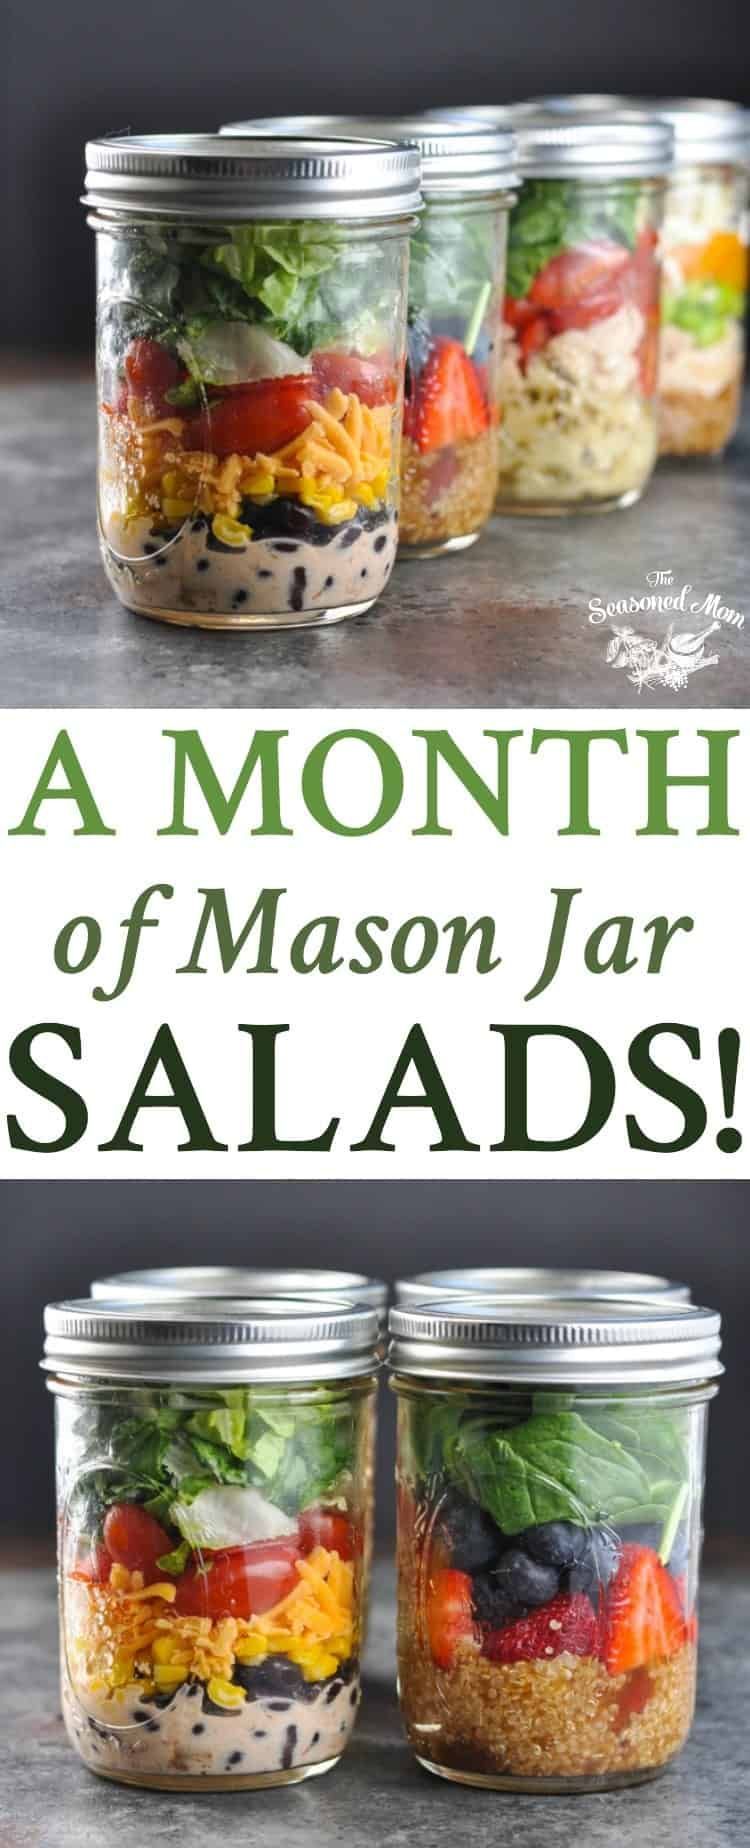 A Month of Mason Jar Salads! -   13 healthy recipes Snacks mason jars ideas